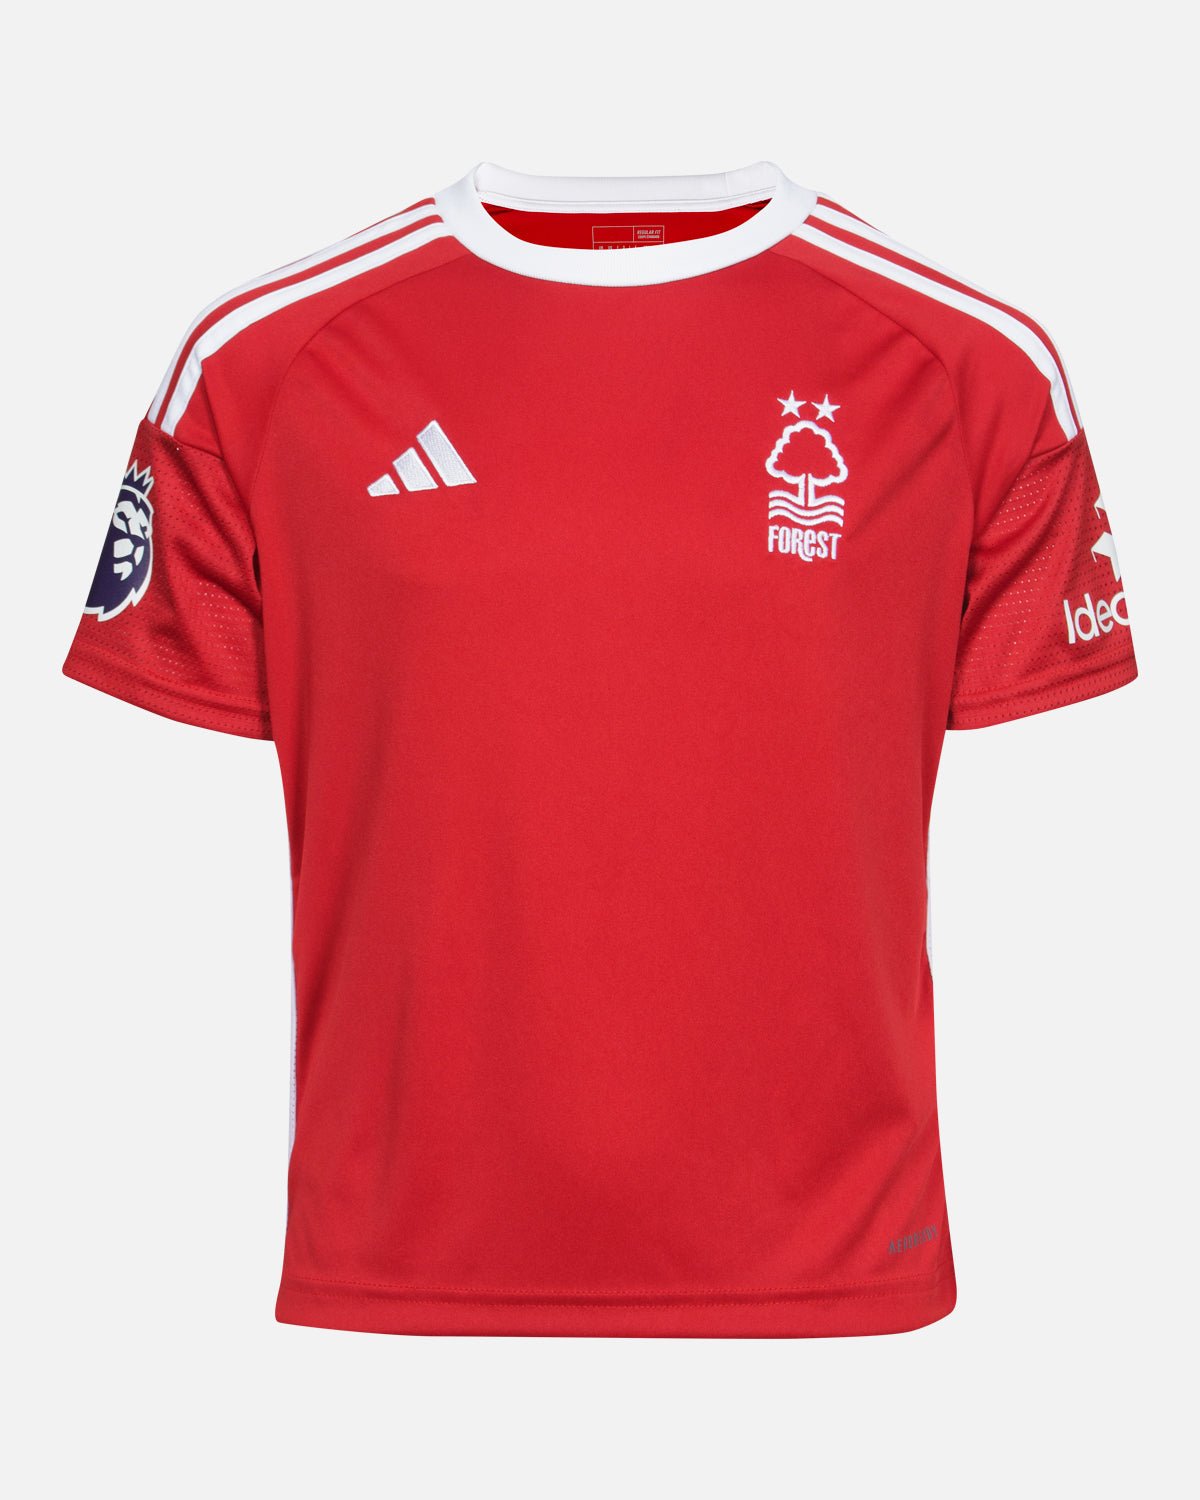 NFFC Junior Home Shirt 23-24 - Williams 7 - Nottingham Forest FC